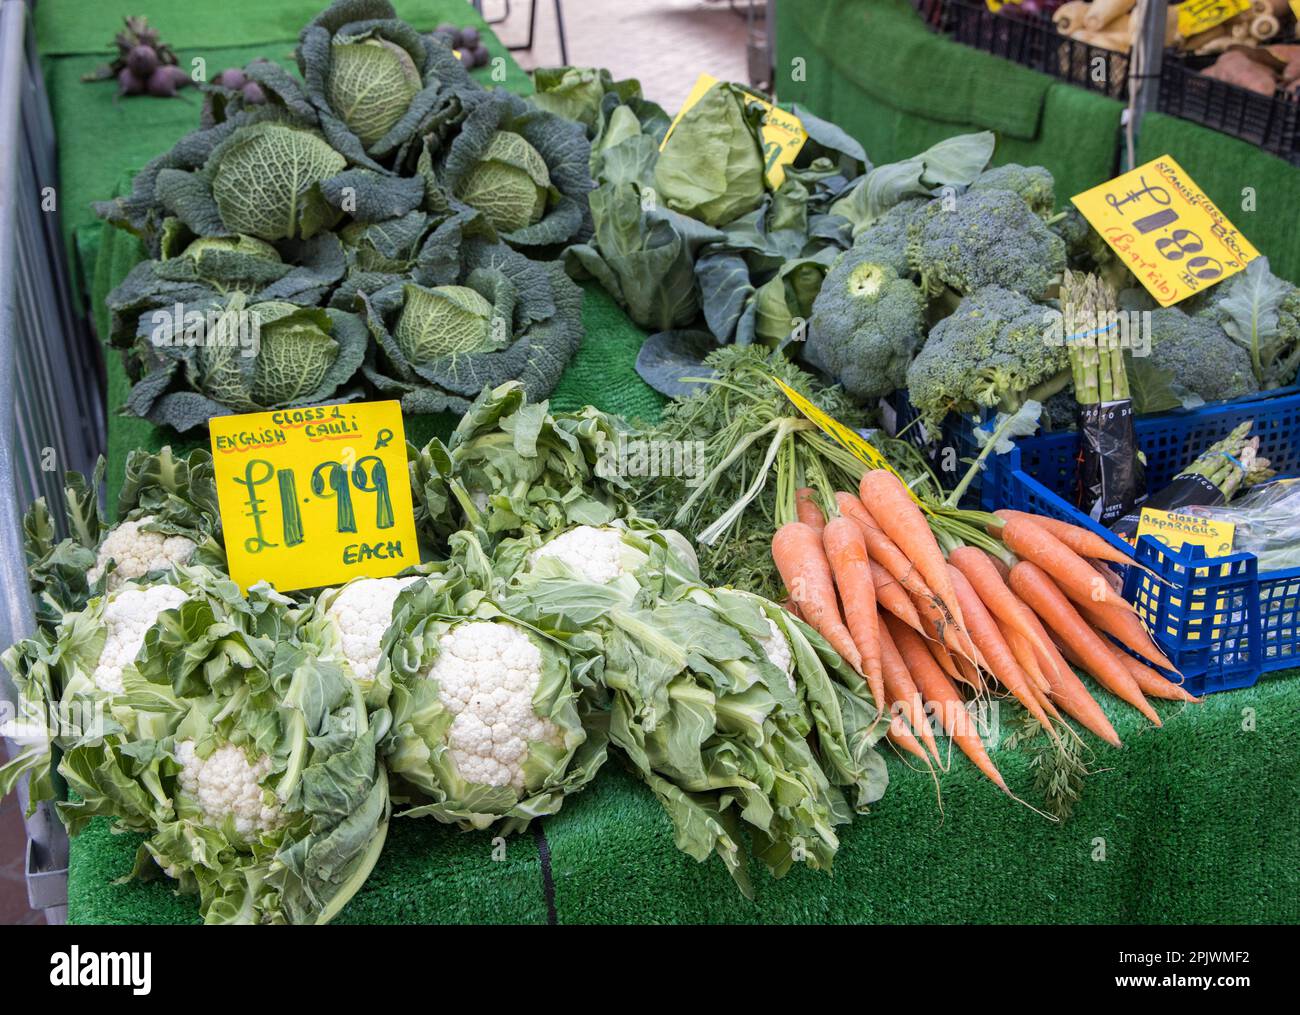 Produce at market stall, Abergavenny, Wales, UK Stock Photo